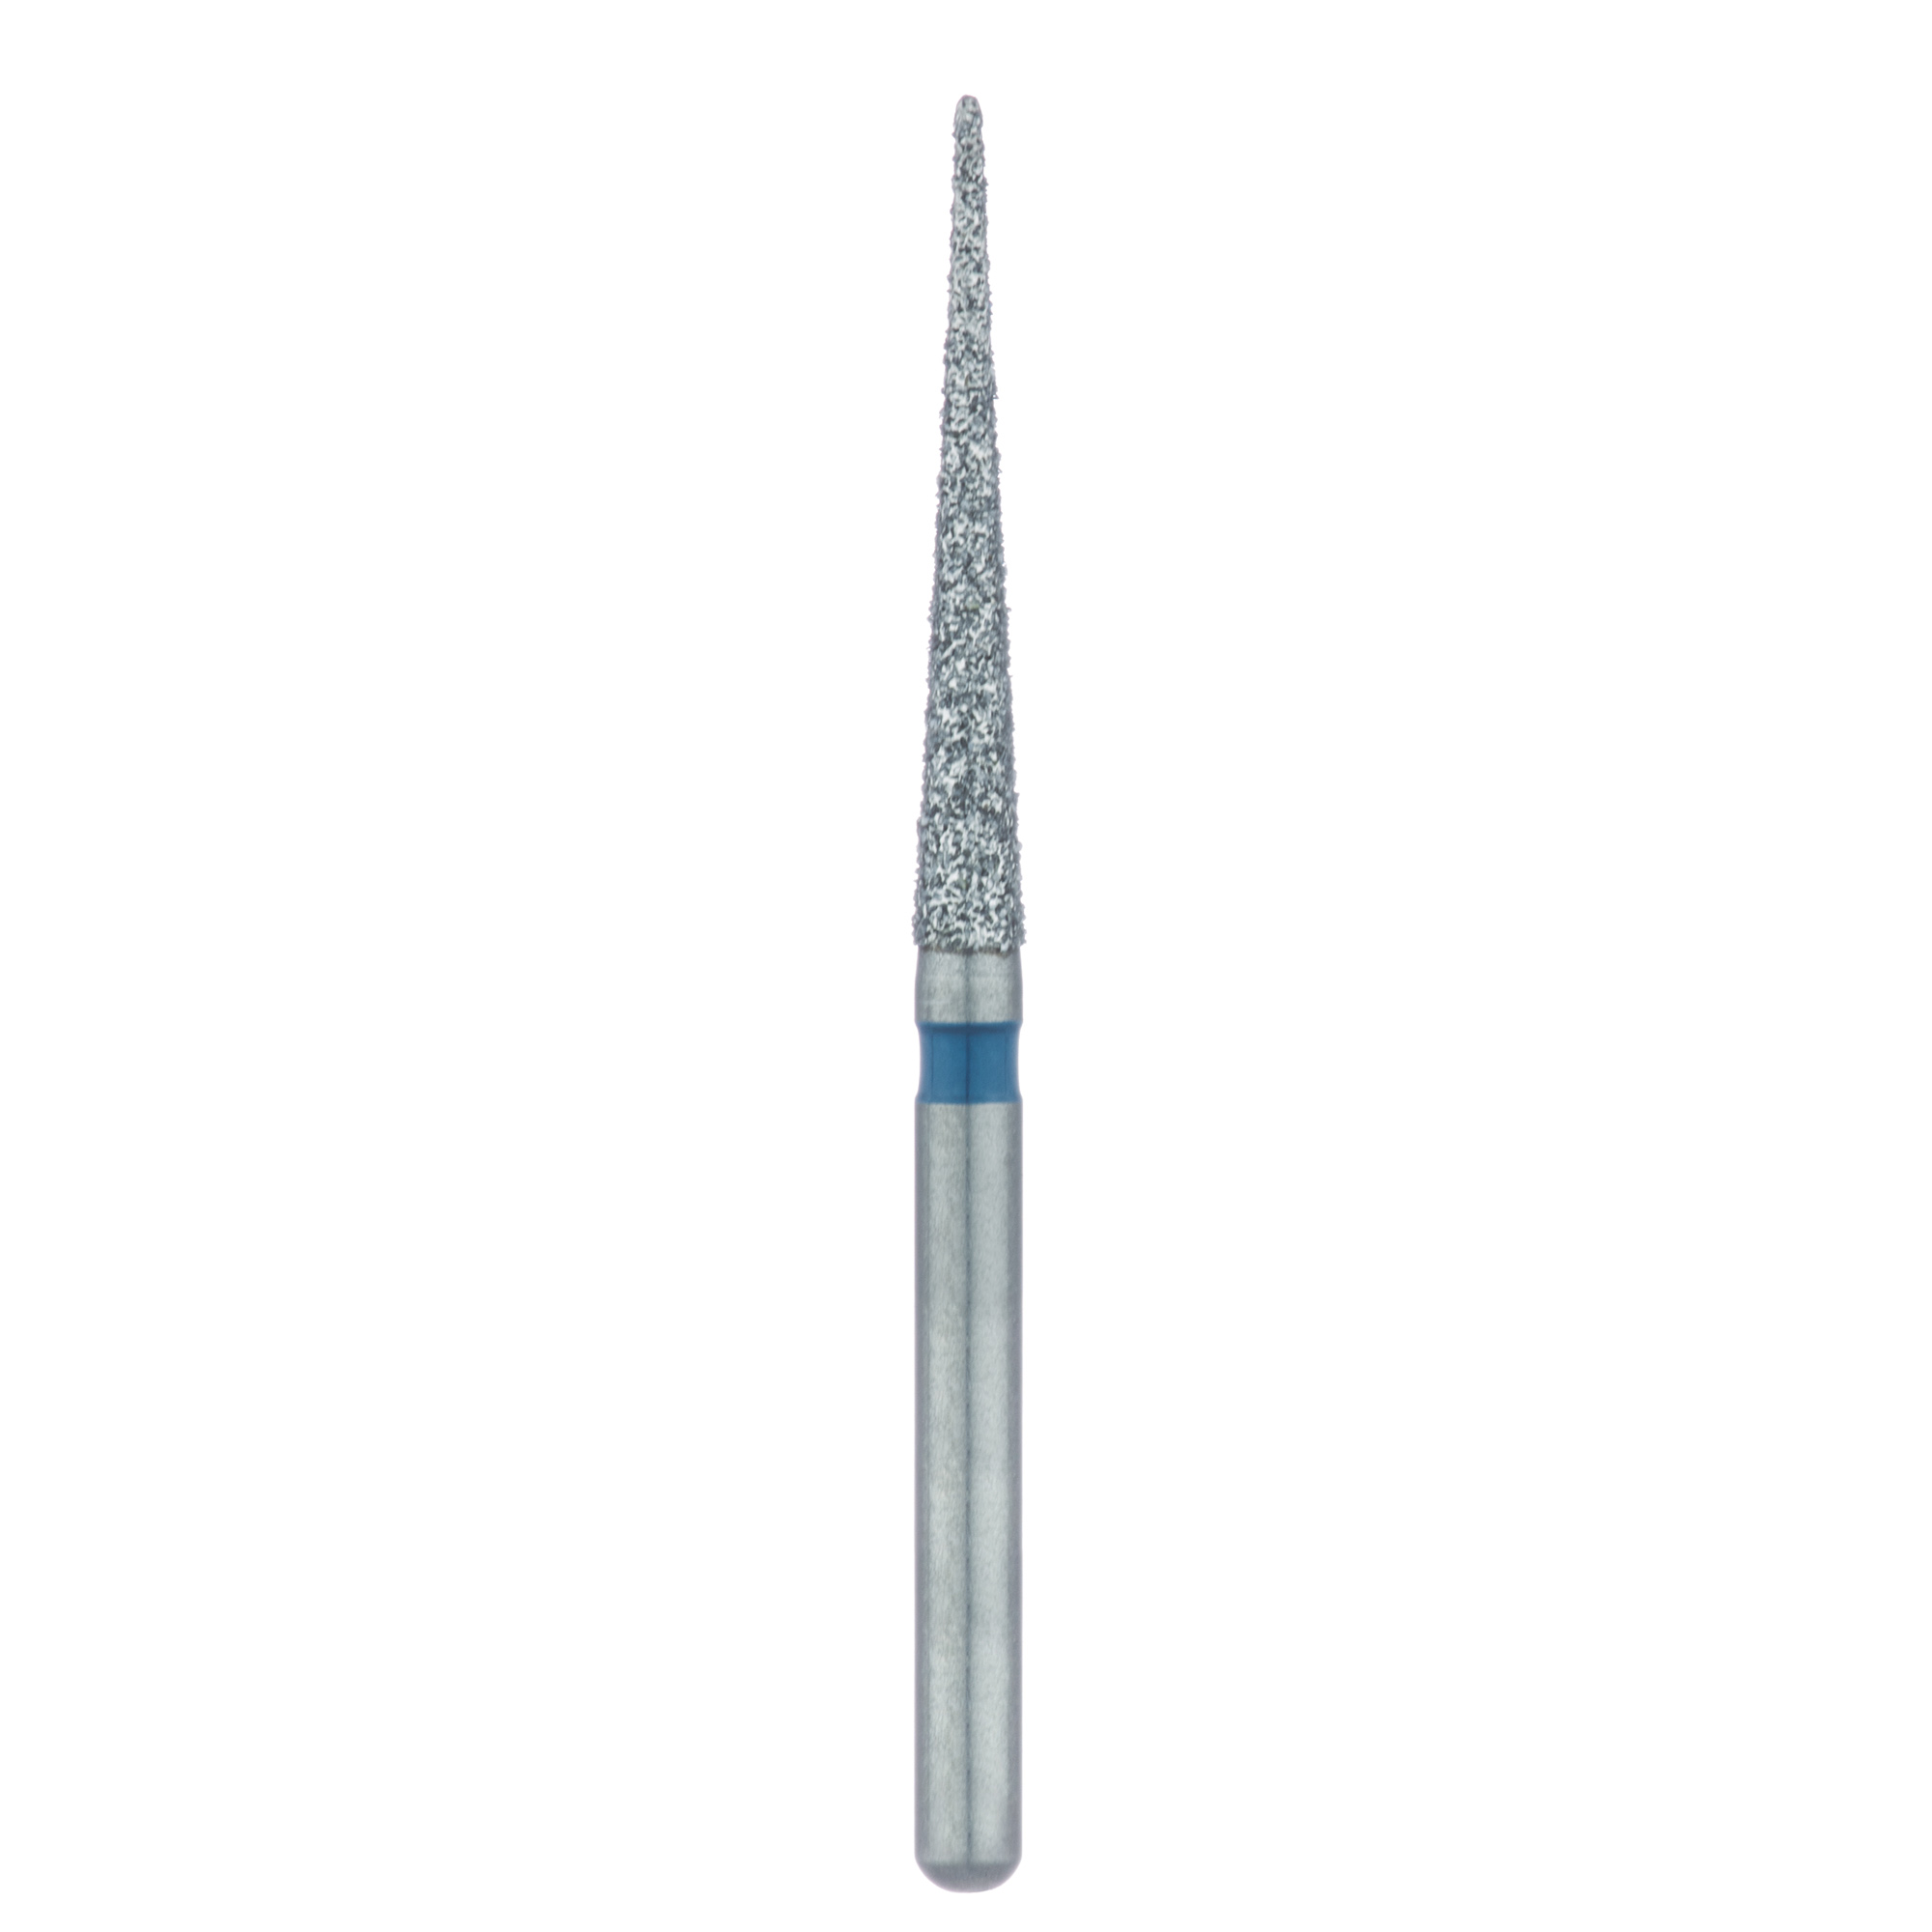 859L-016-FG Long Needle Diamond Bur, 1.6mm Medium, FG